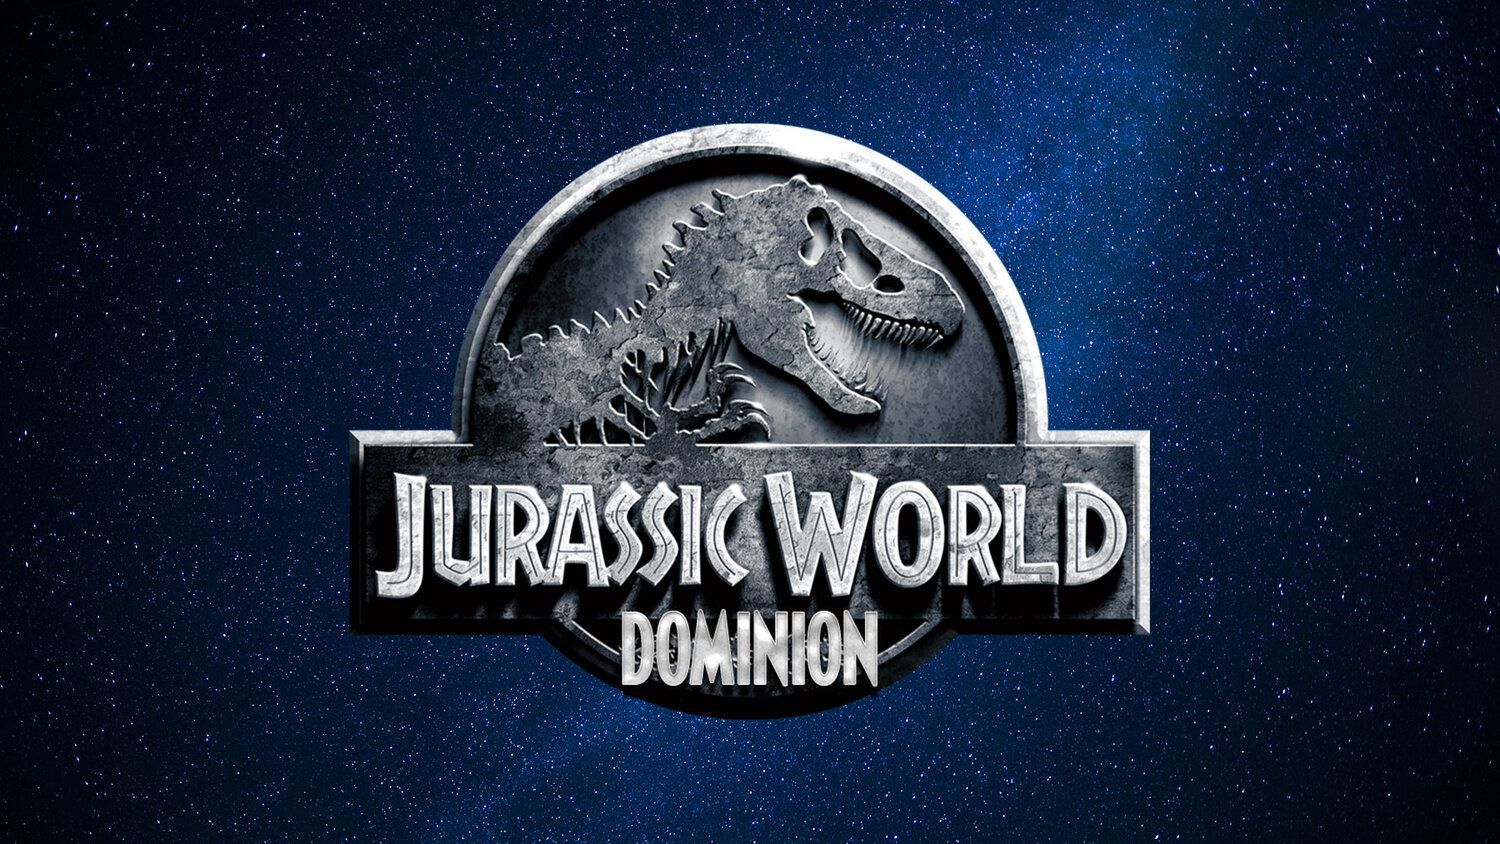 New Jurassic World Dominion Set Photo Tease Filming Near London